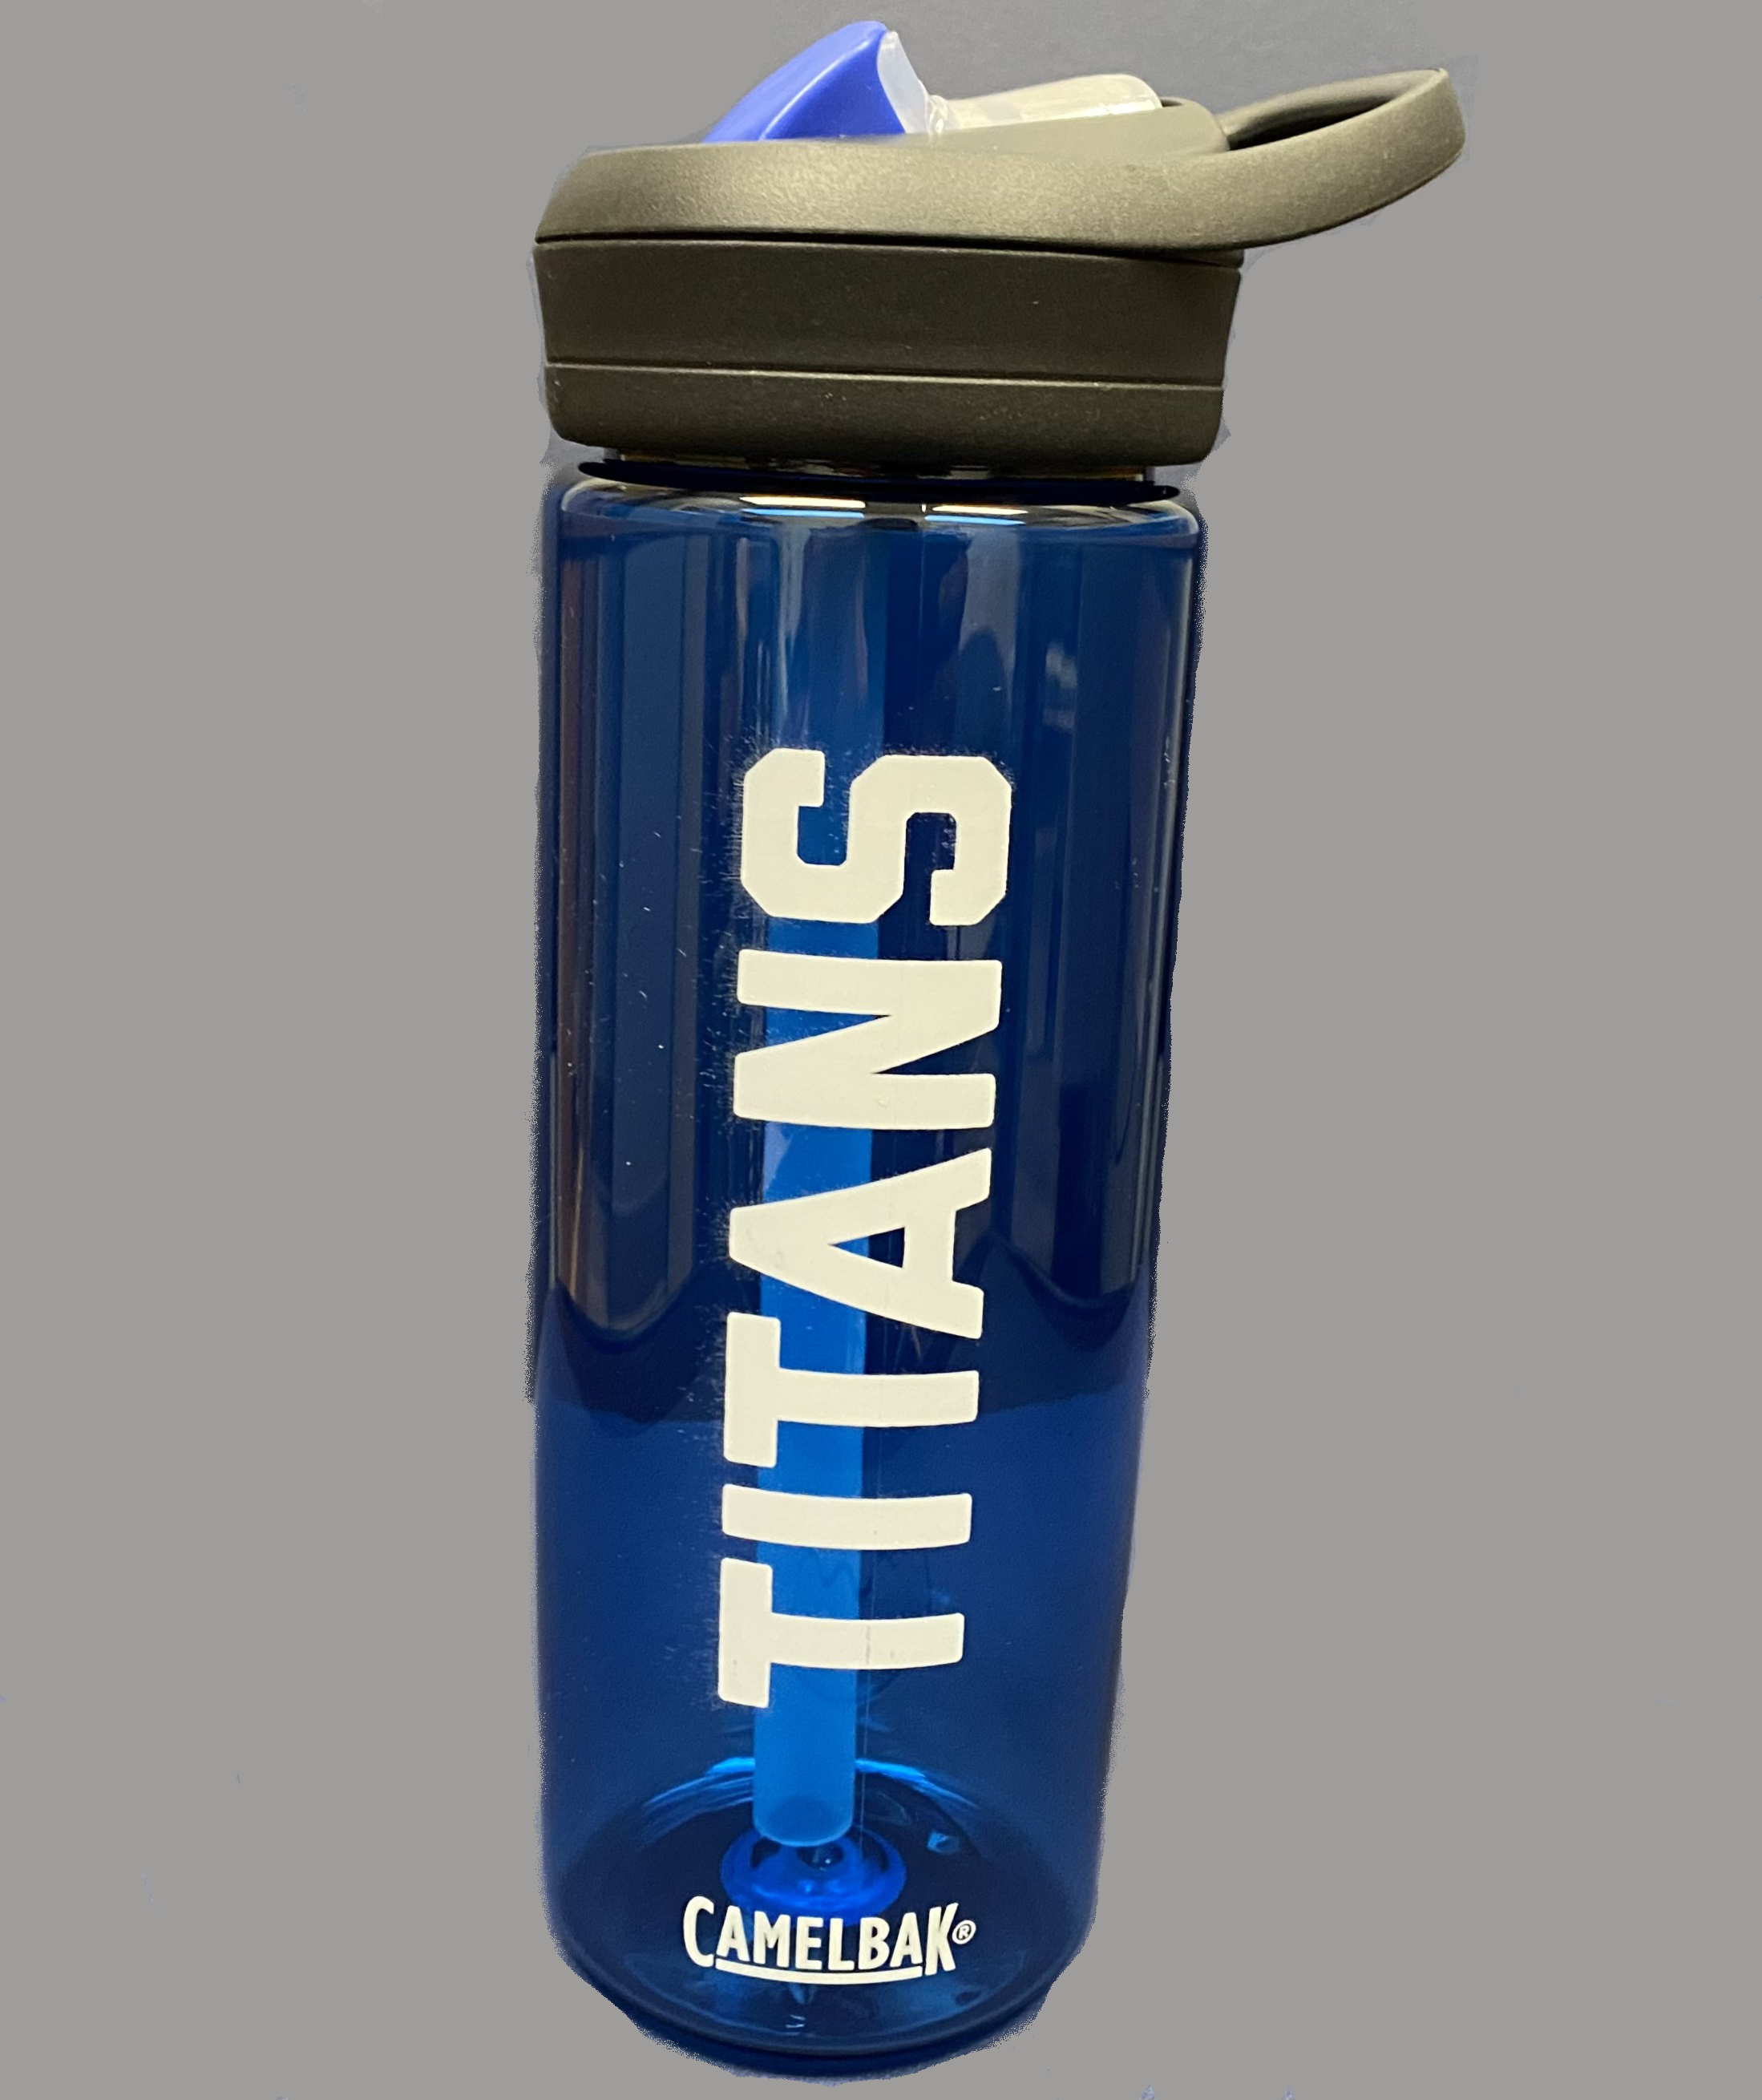 CamelBak Tritan Interlochen Water Bottle